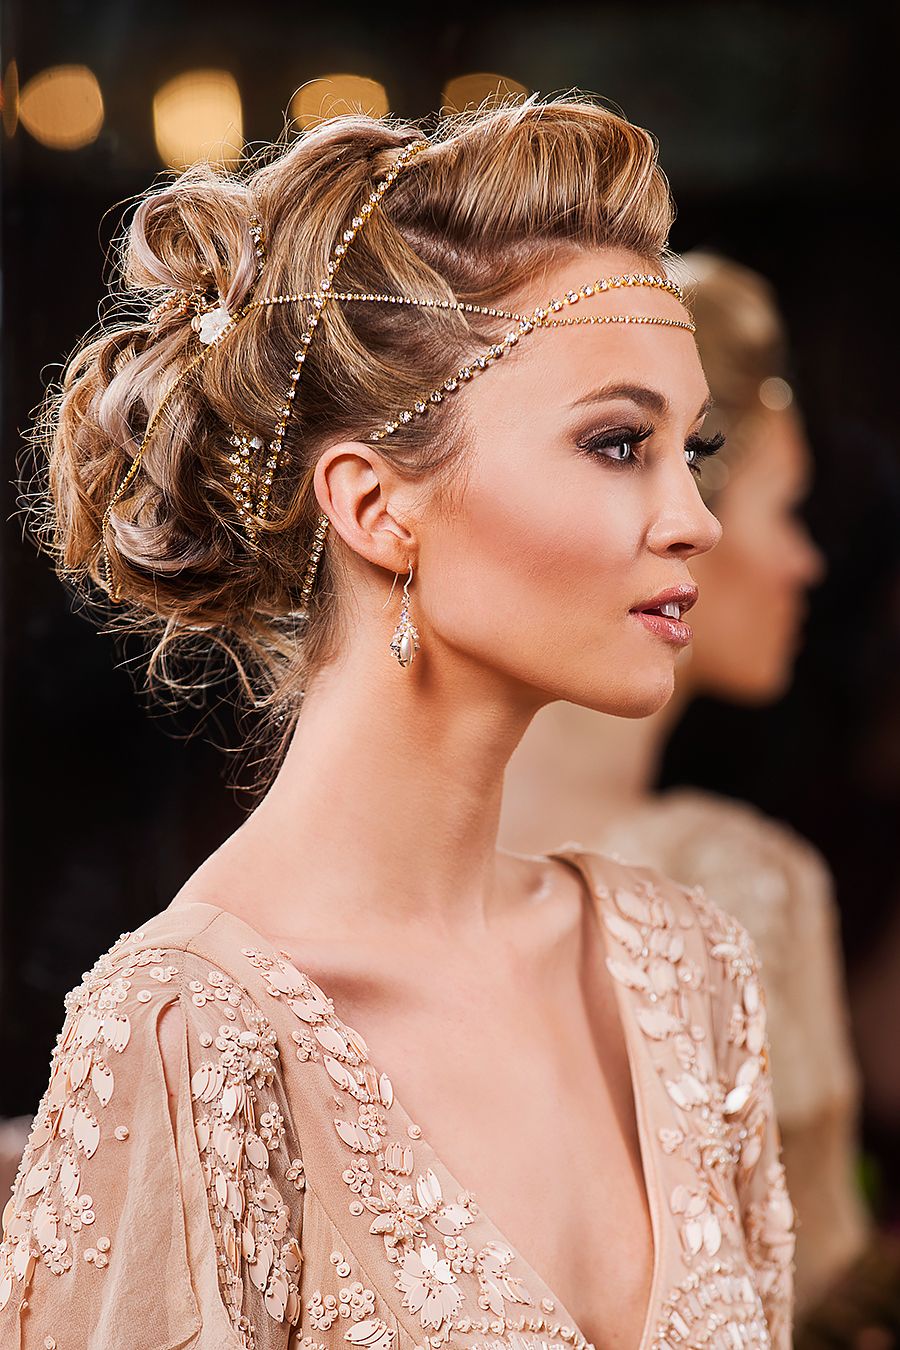 Wedding Hair Accessories For Fashion-Forward Brides